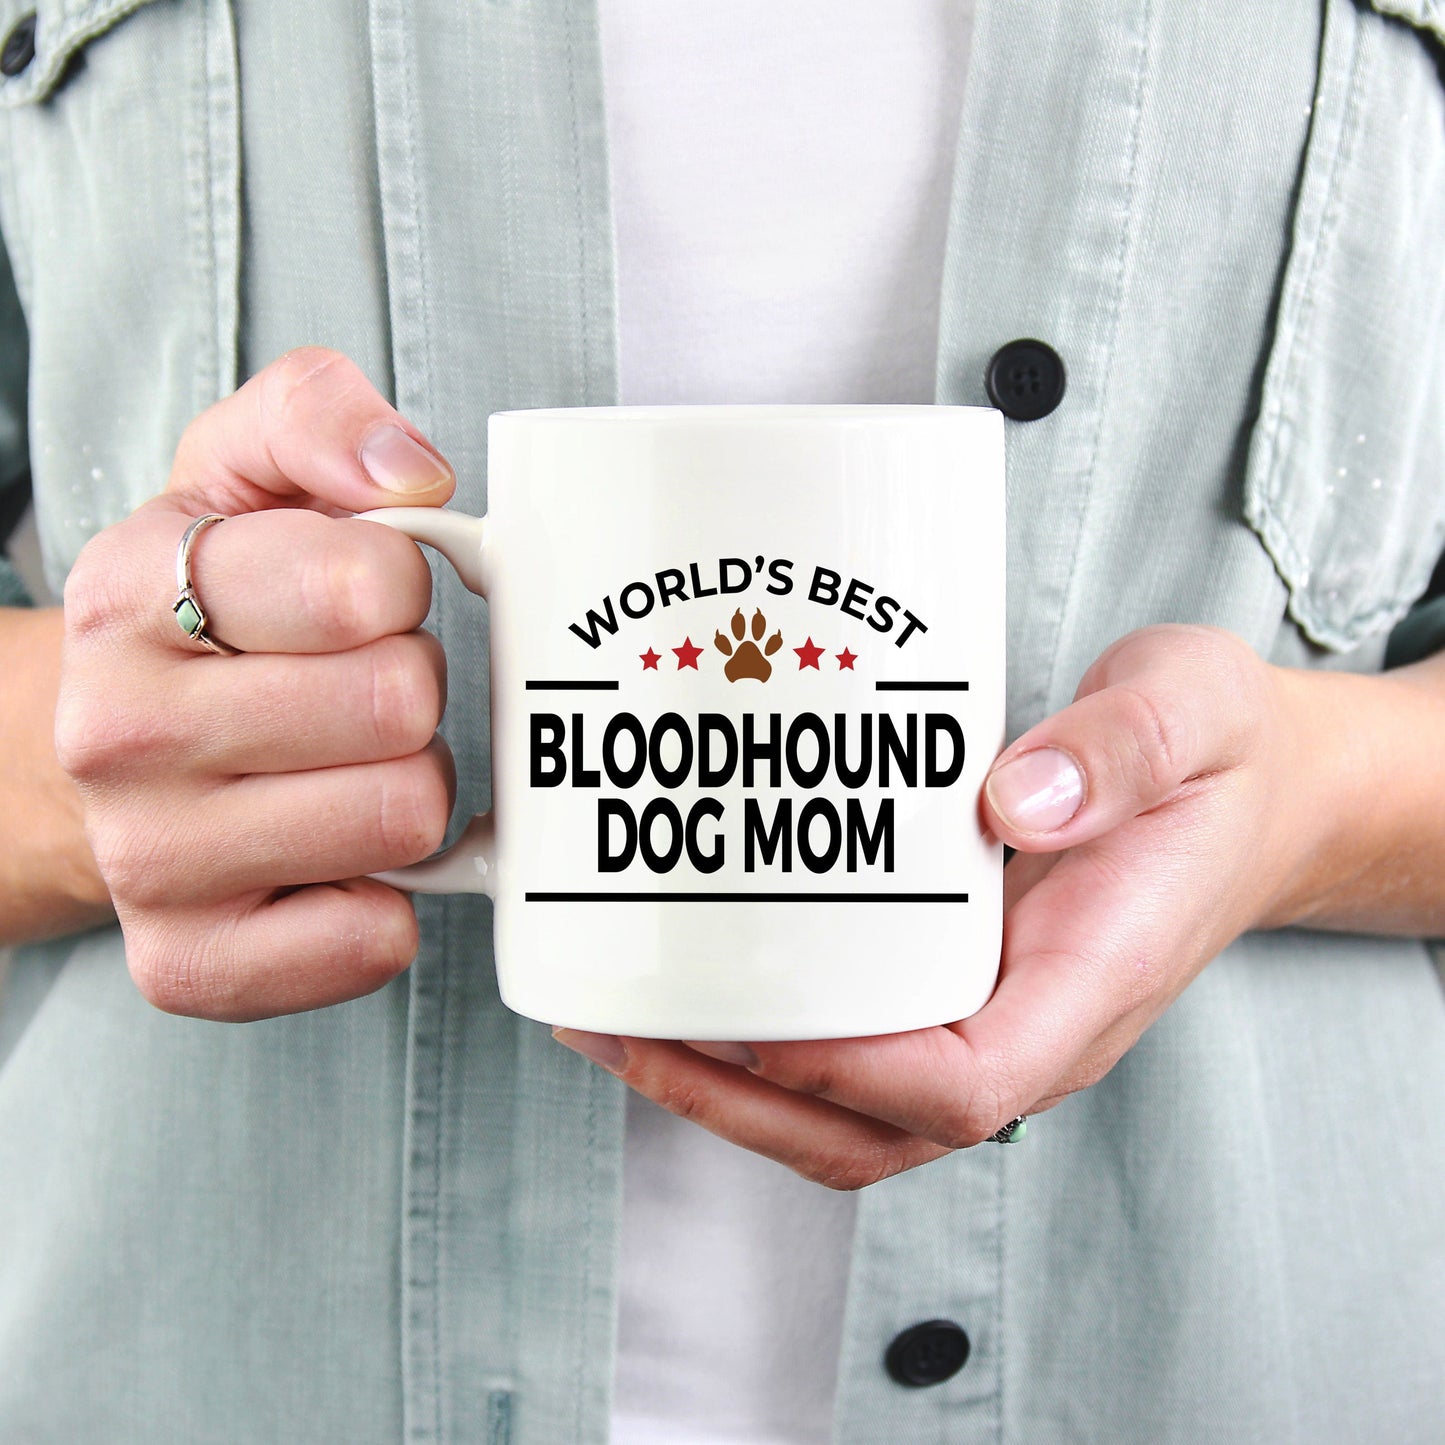 Bloodhound Dog Best Coffee Mug